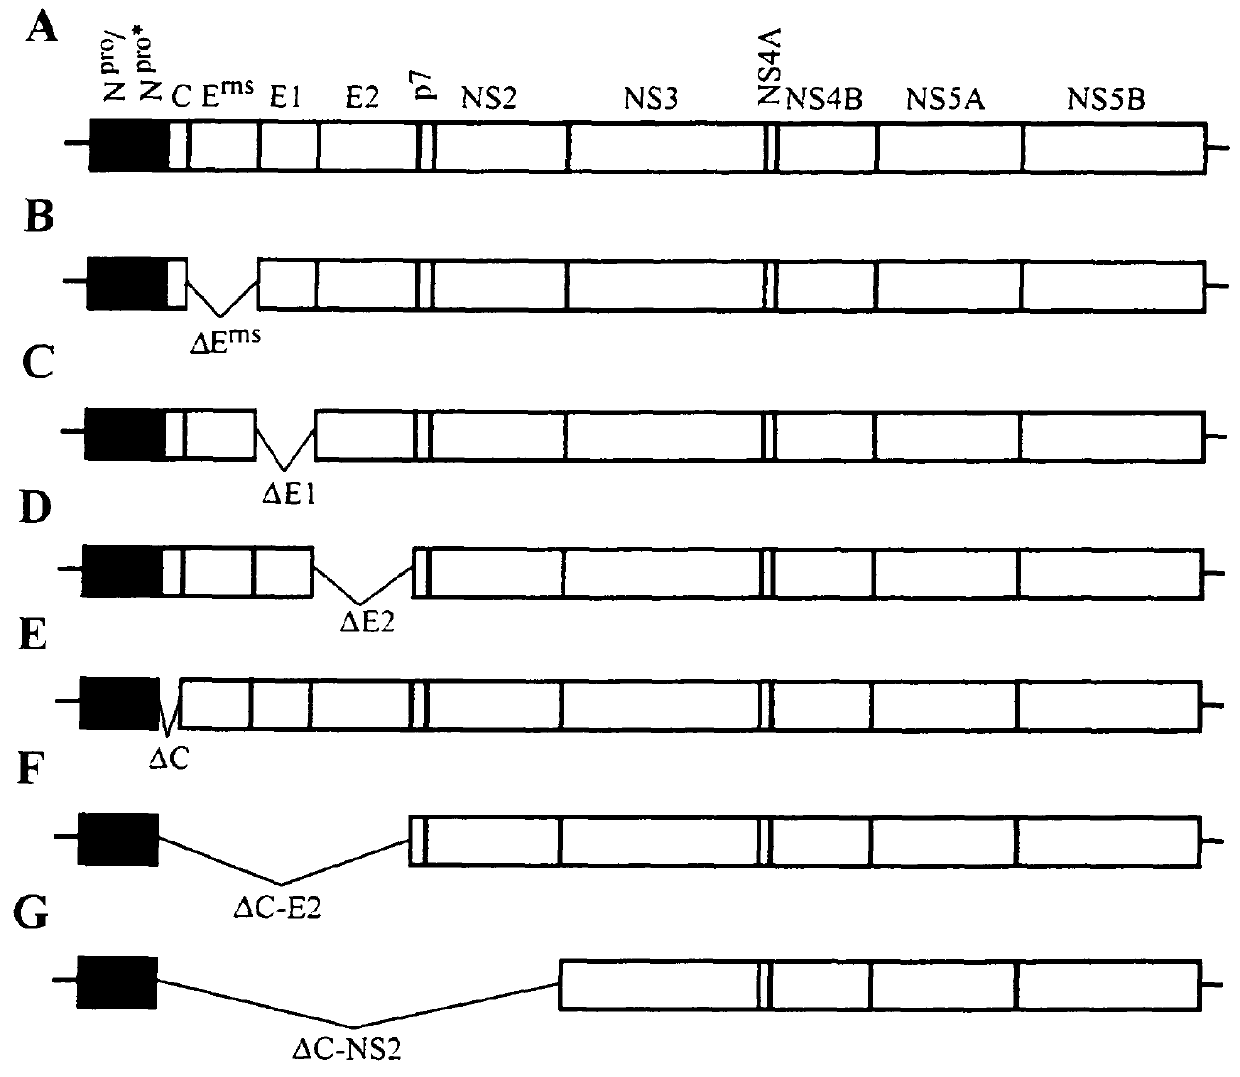 Pestivirus replicons providing an RNA-based viral vector system